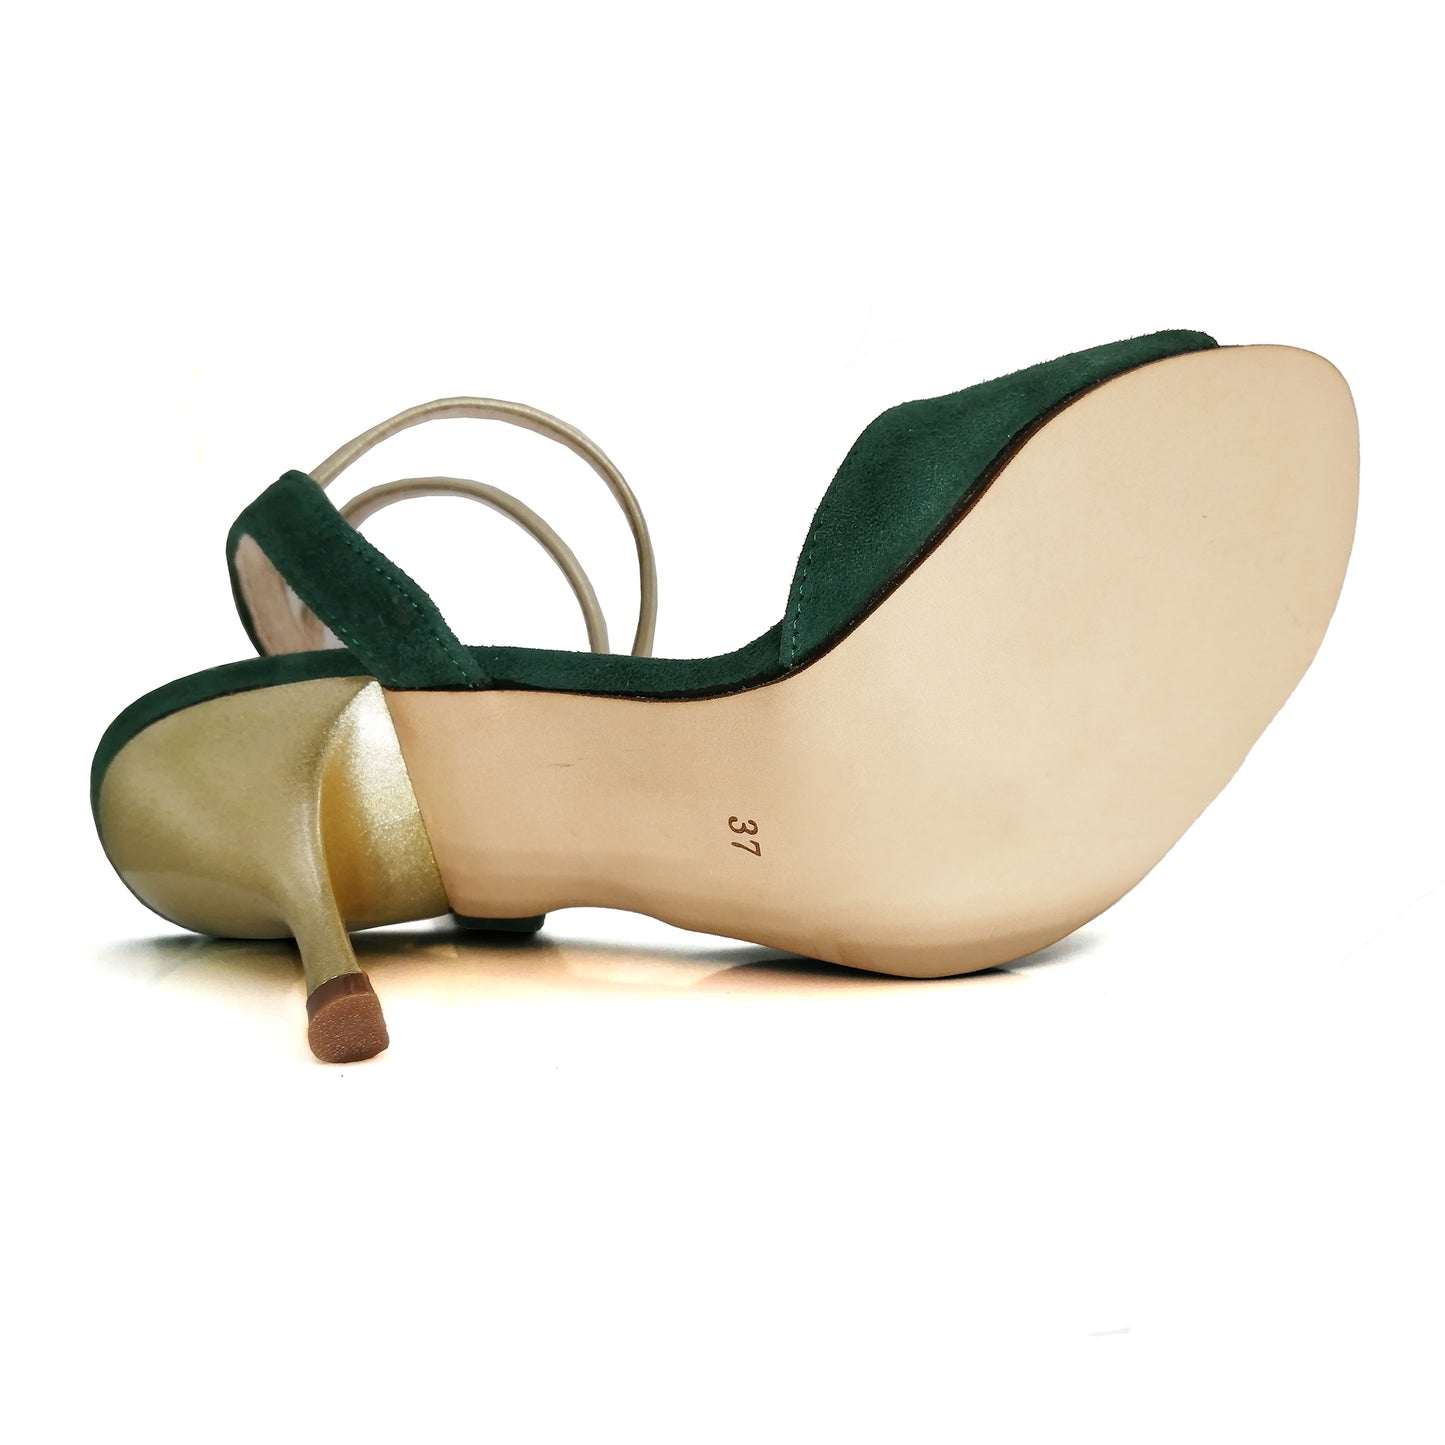 Pro Dancer Argentine Tango Dance Shoes High Heel Dancing Sandals Leather Sole Dark Green (PD-9006C)